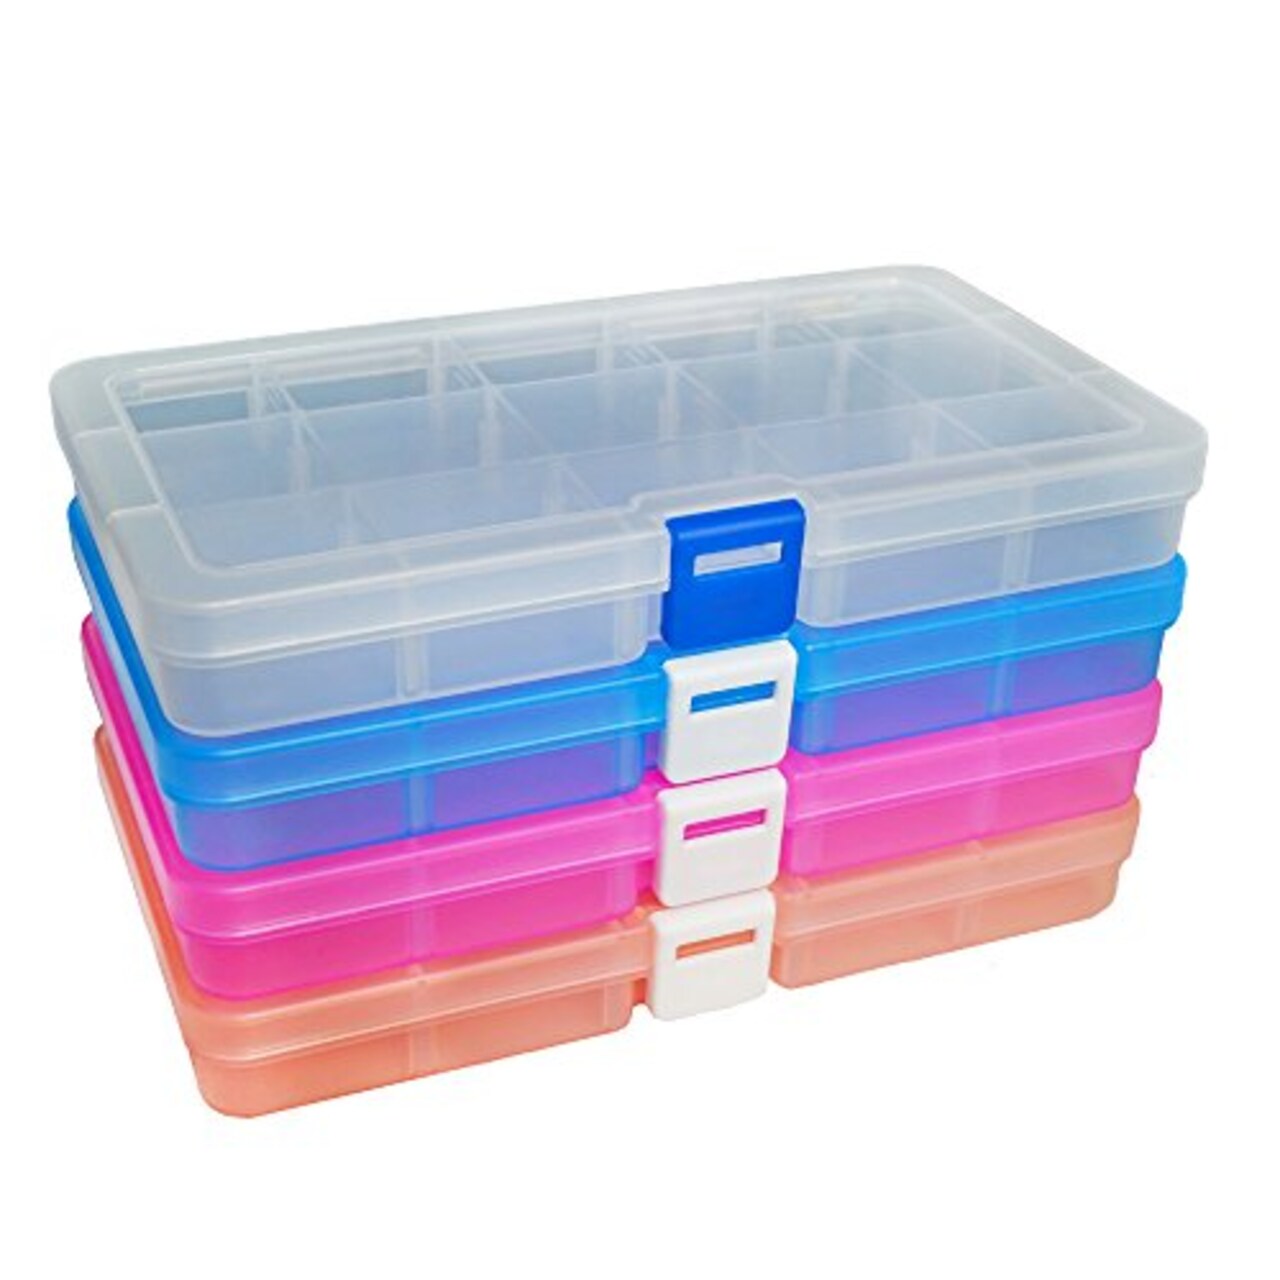 DUOFIRE Plastic Organizer Container Storage Box Adjustable Divider